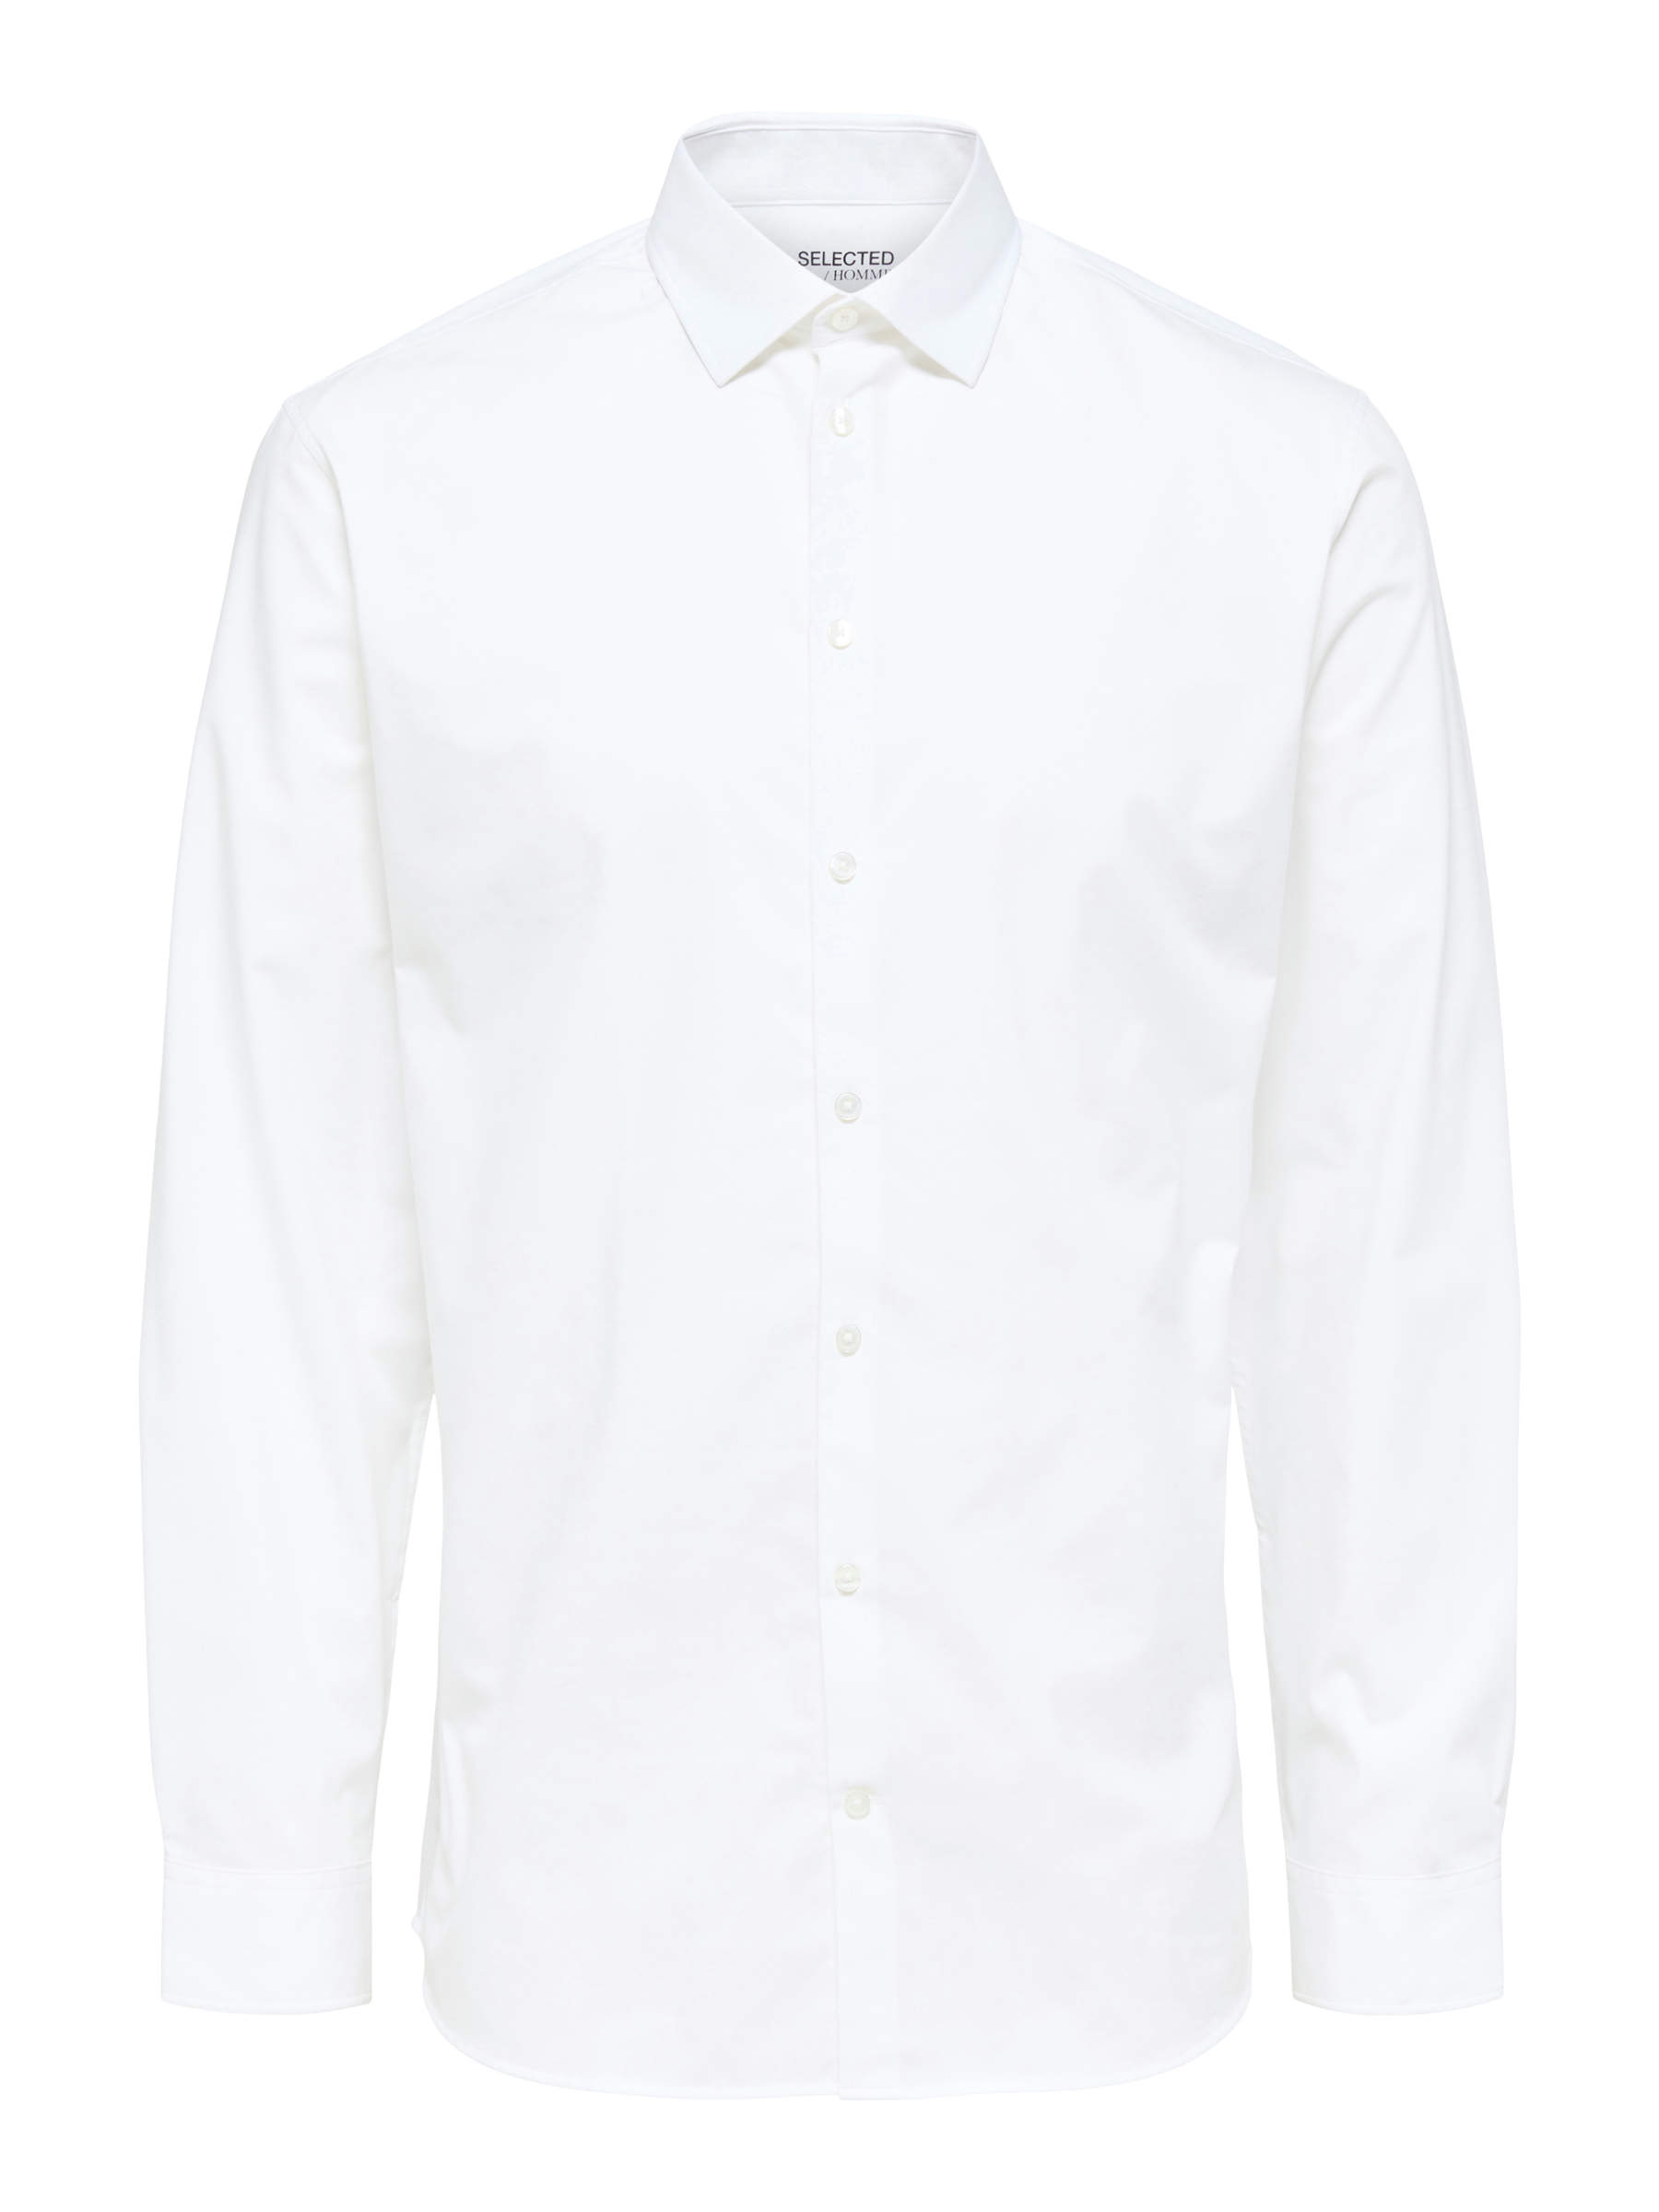 Regular fit coolmax® long sleeved shirt | Selected